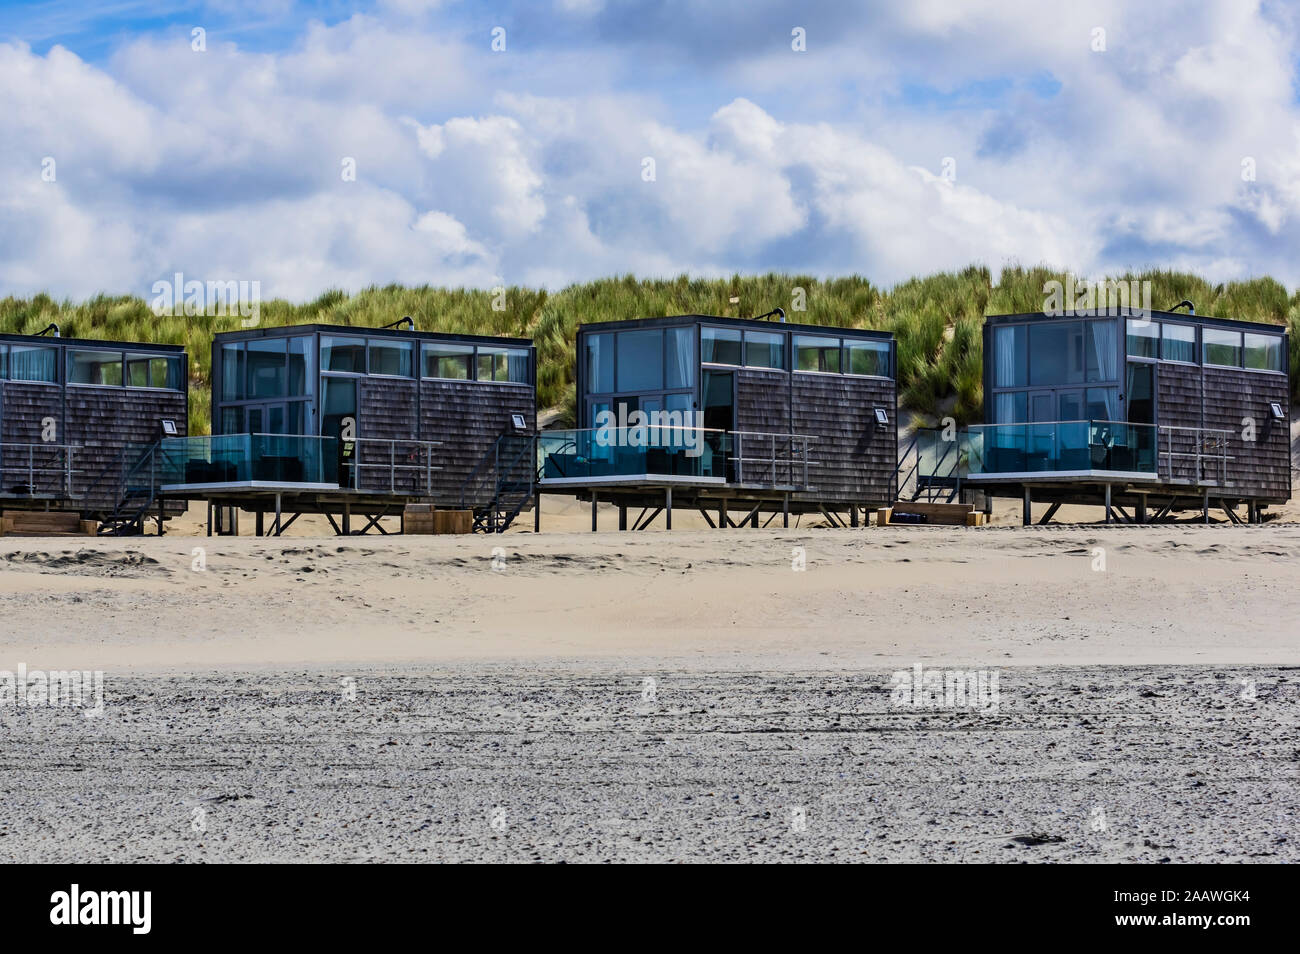 Netherlands, Zeeland, Domburg, row of modern houses on sandy beach Stock Photo